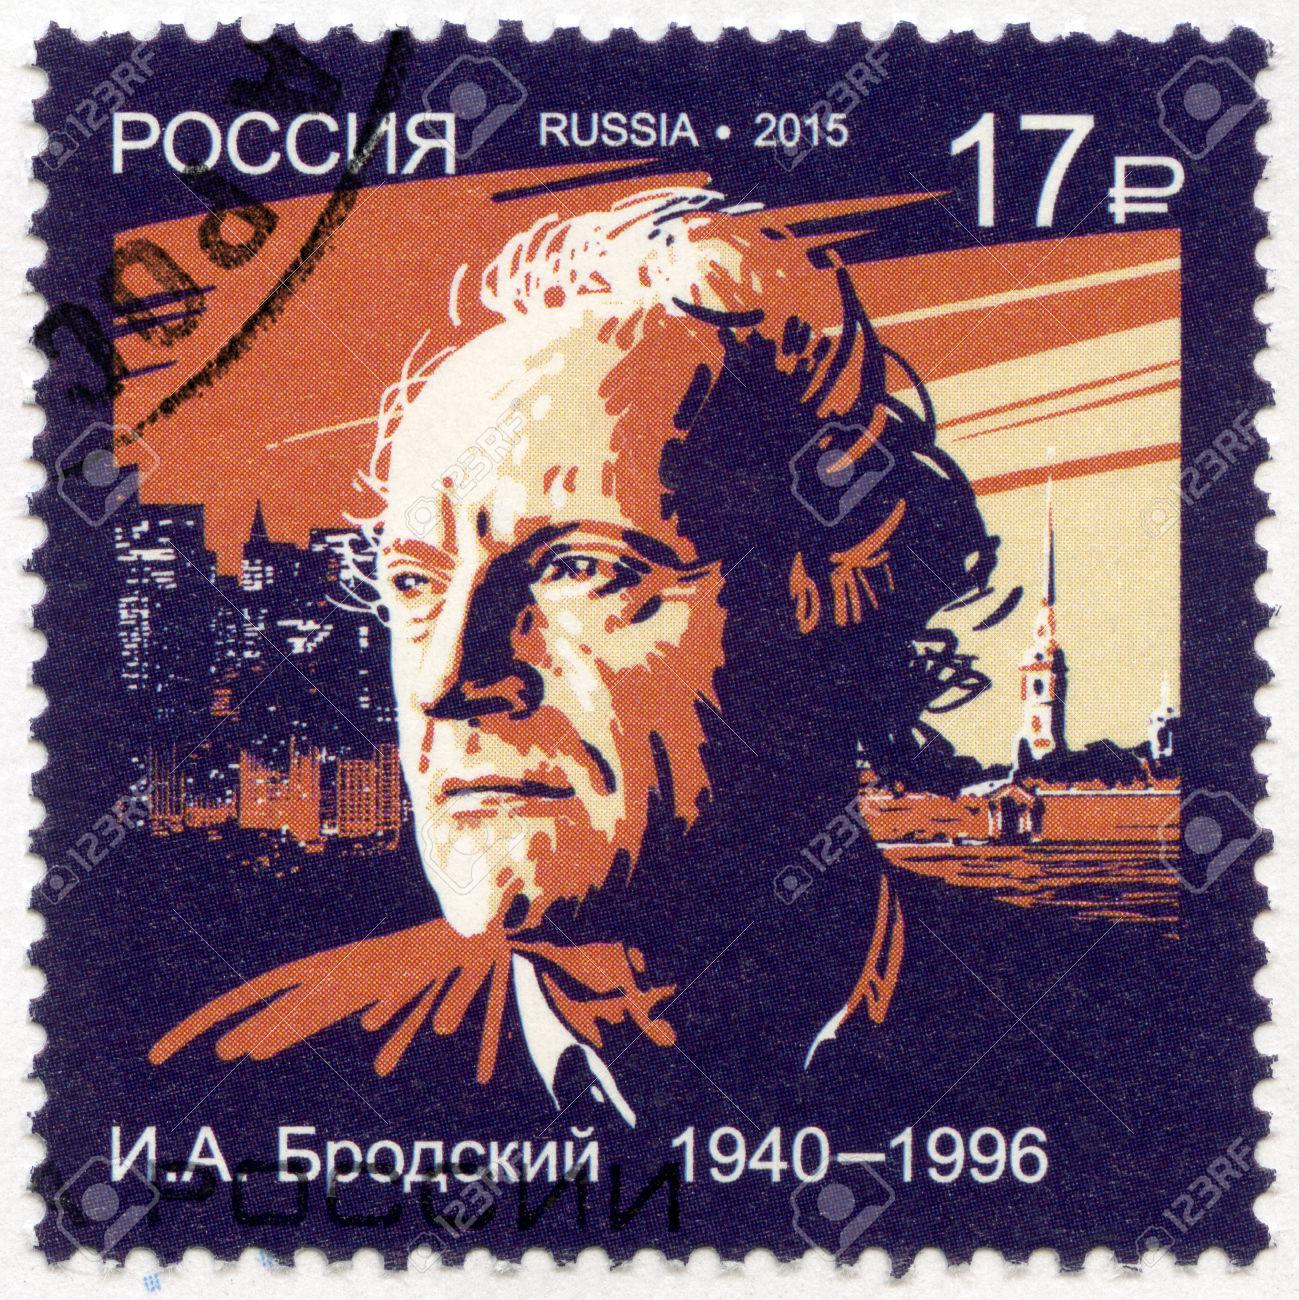 40484985-RUSSIA-CIRCA-2015-A-stamp-printed-in-Russia-shows-Iosif-Joseph-Aleksandrovich-Brodsky-1940-1996-poet-Stock-Photo.jpg